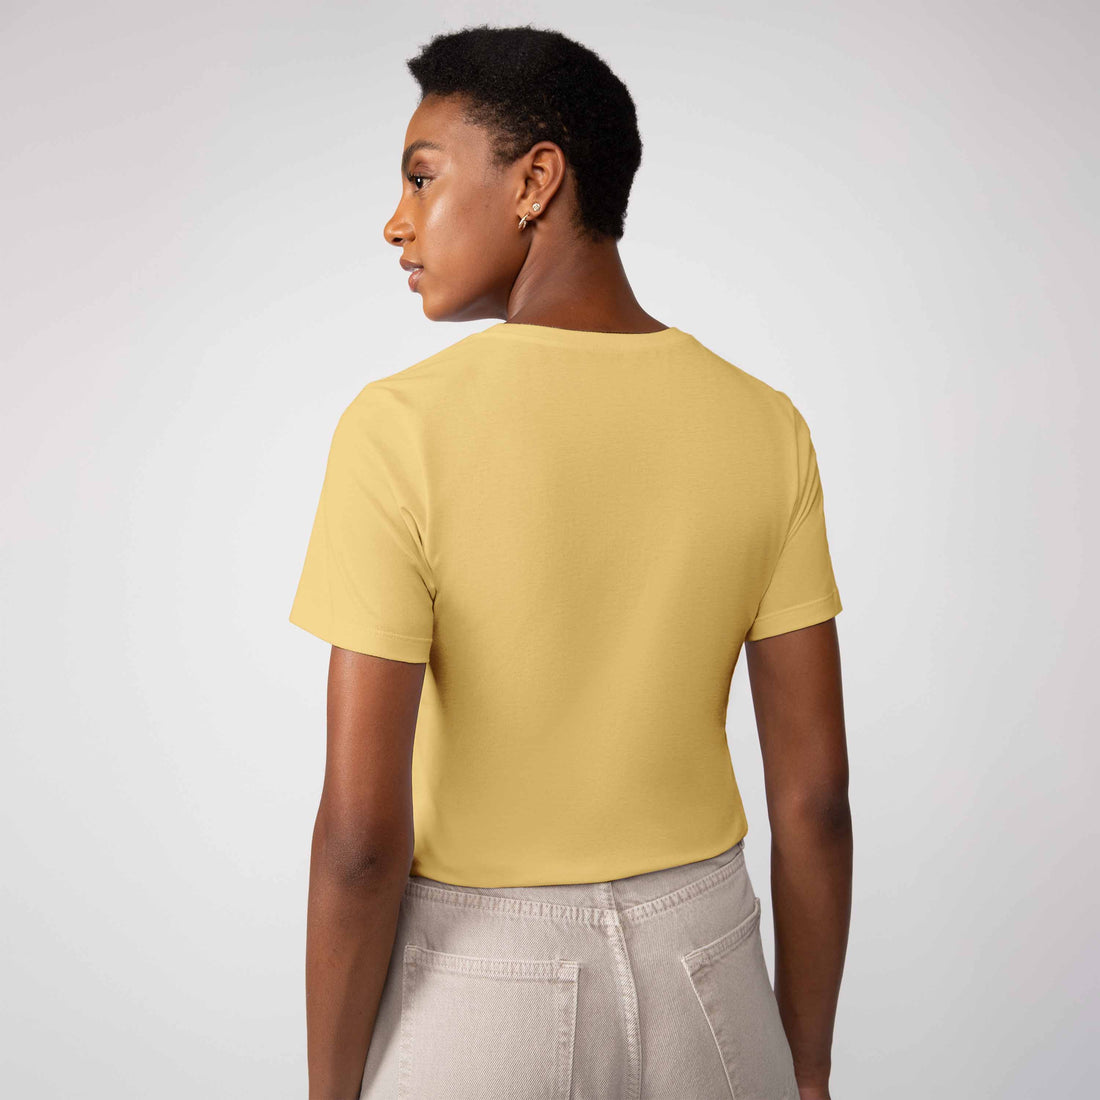 Camiseta Algodão Premium Feminina | Everyday Collection - Amarelo Mel